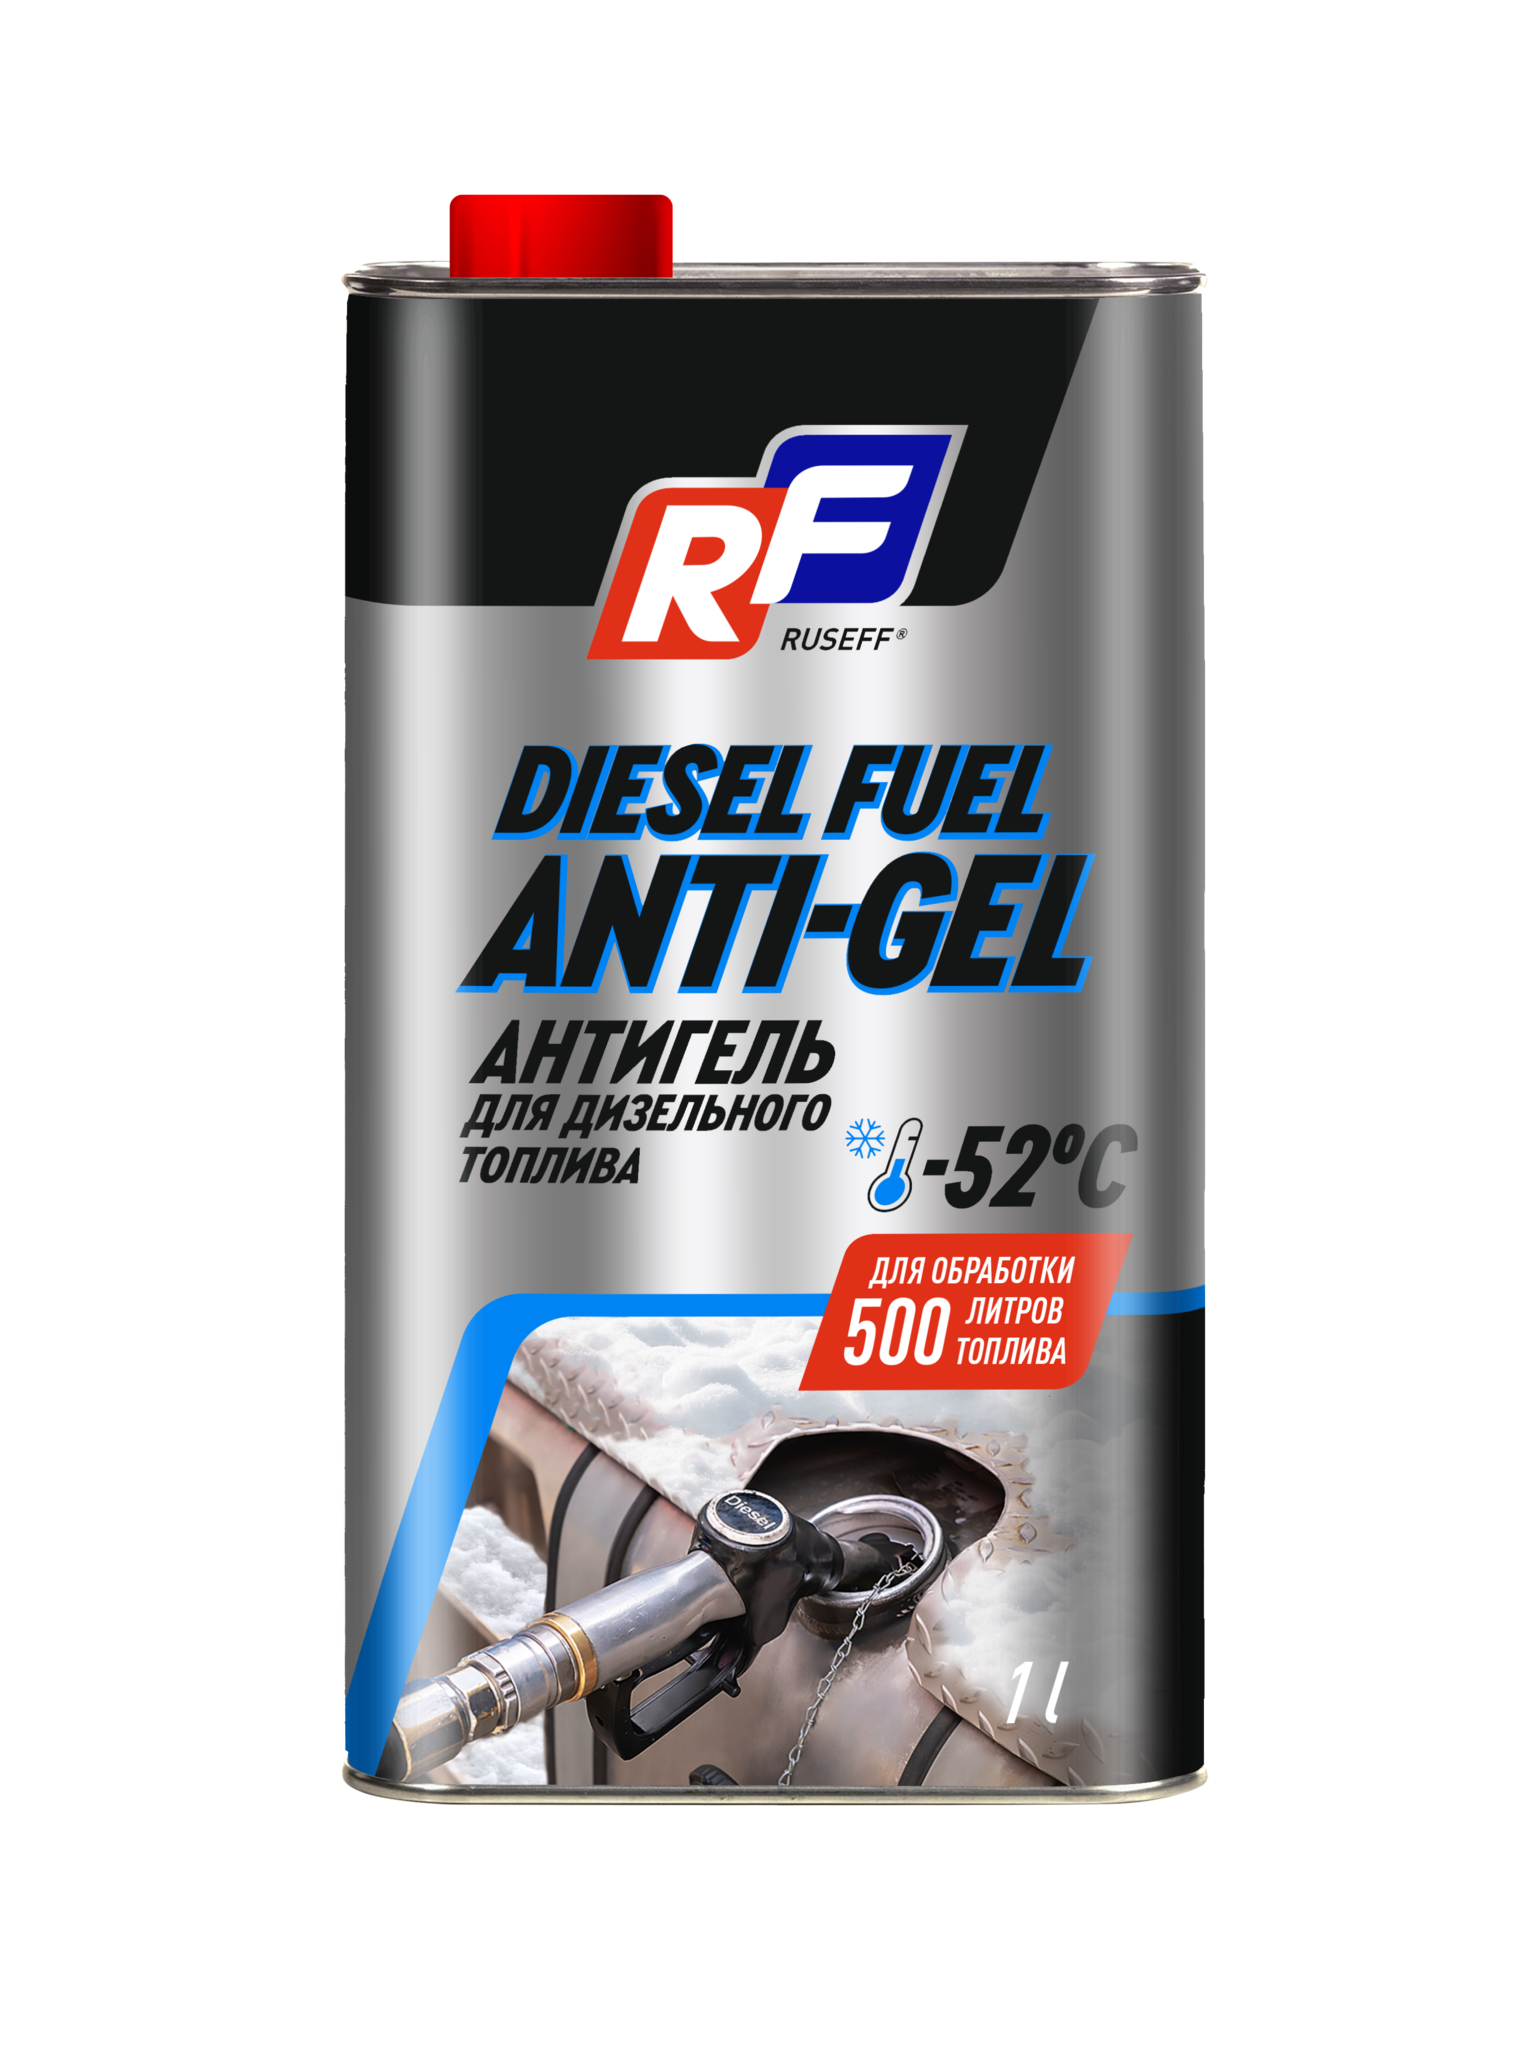 Ruseff Diesel Fuel Anti Gel Антигель для грузовых автомобилей